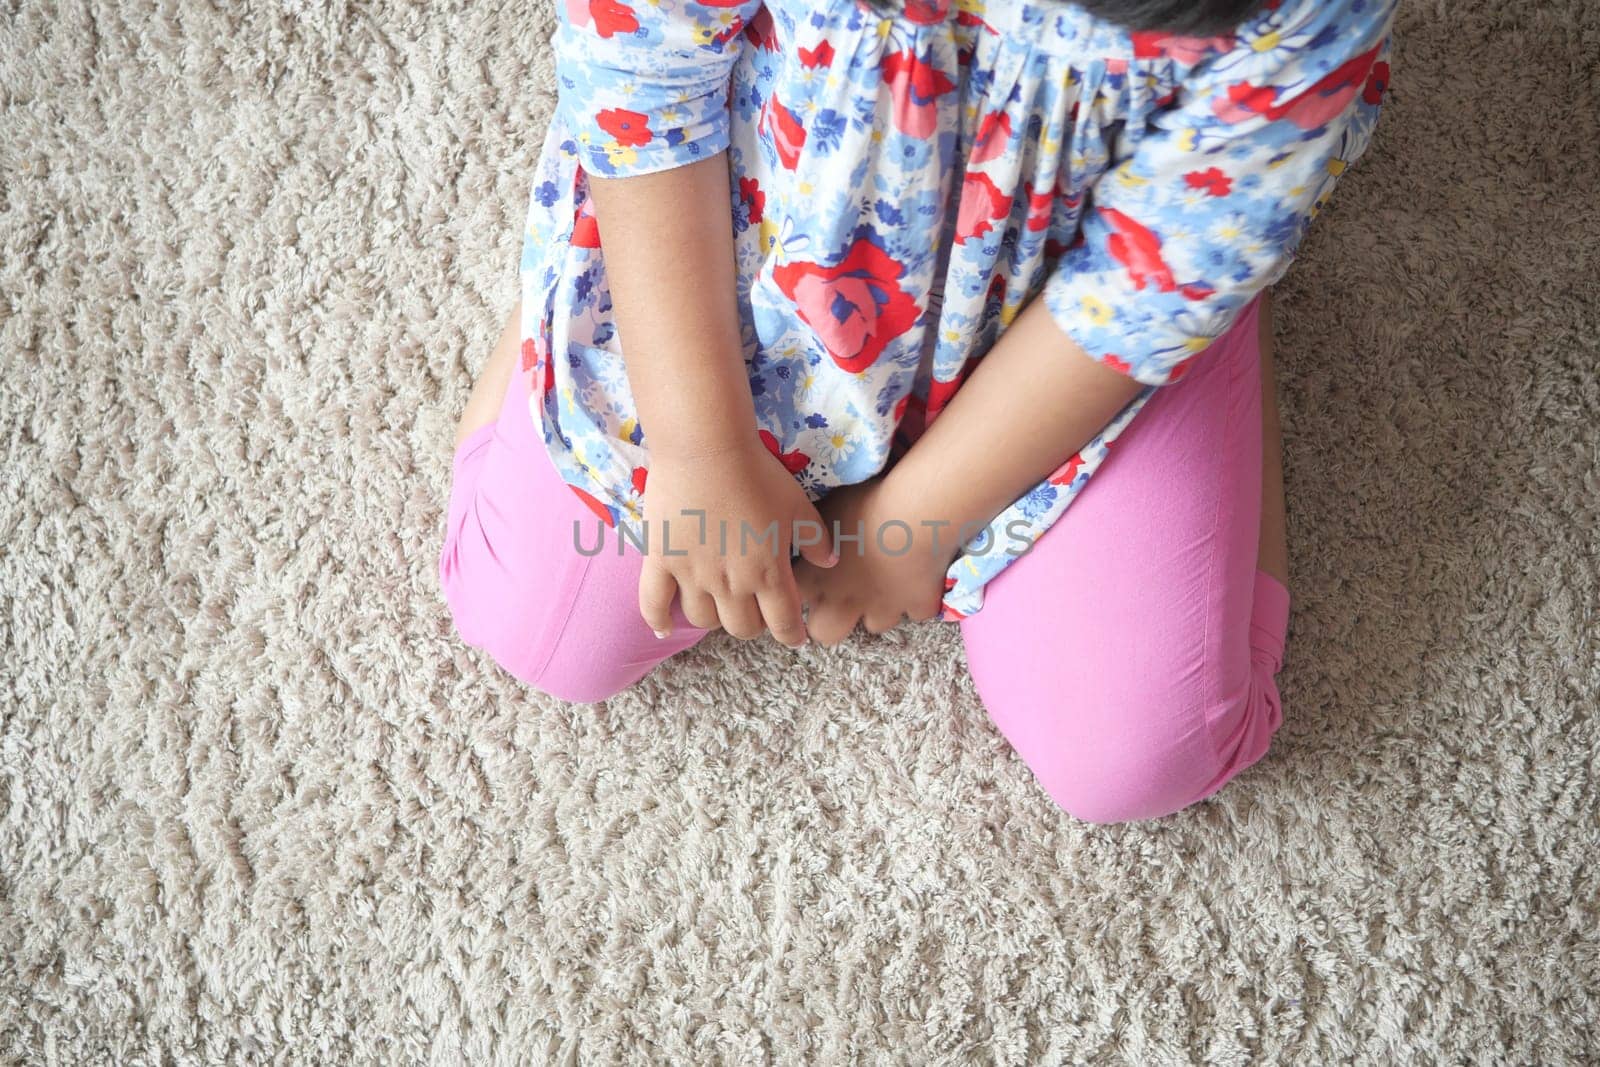 child sitting W posture on the floor